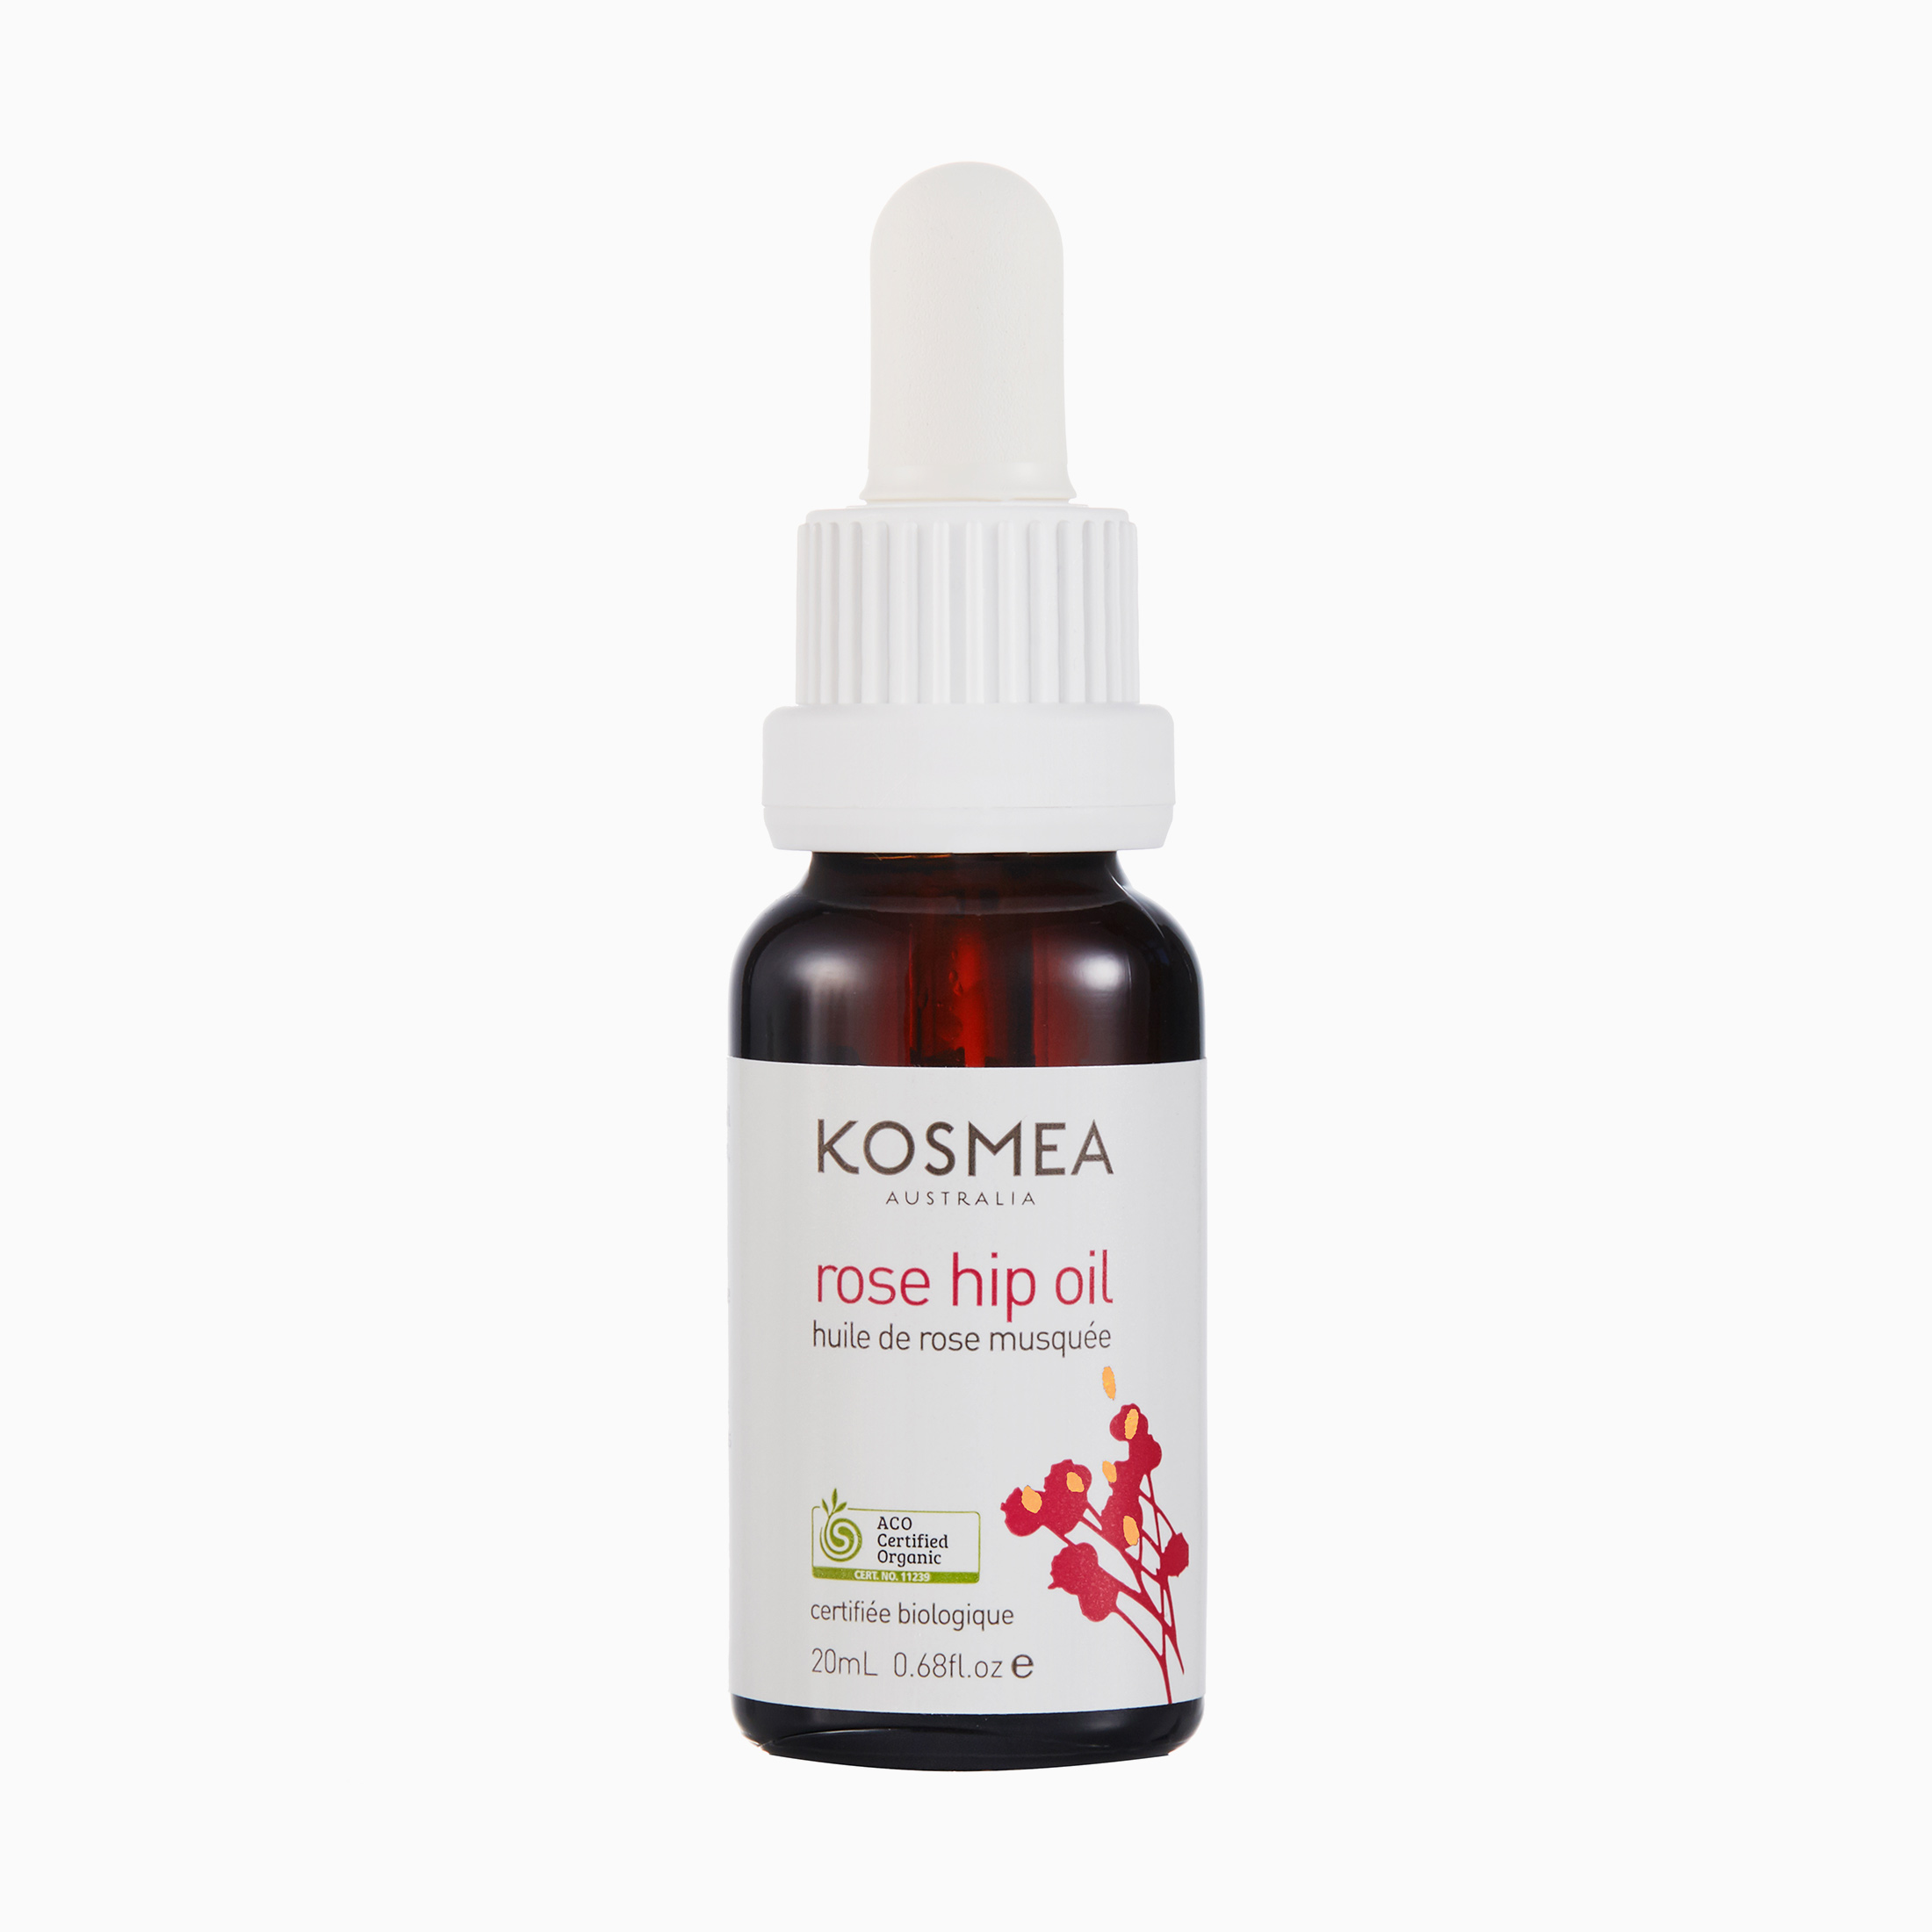 Kosmea rose hip oil